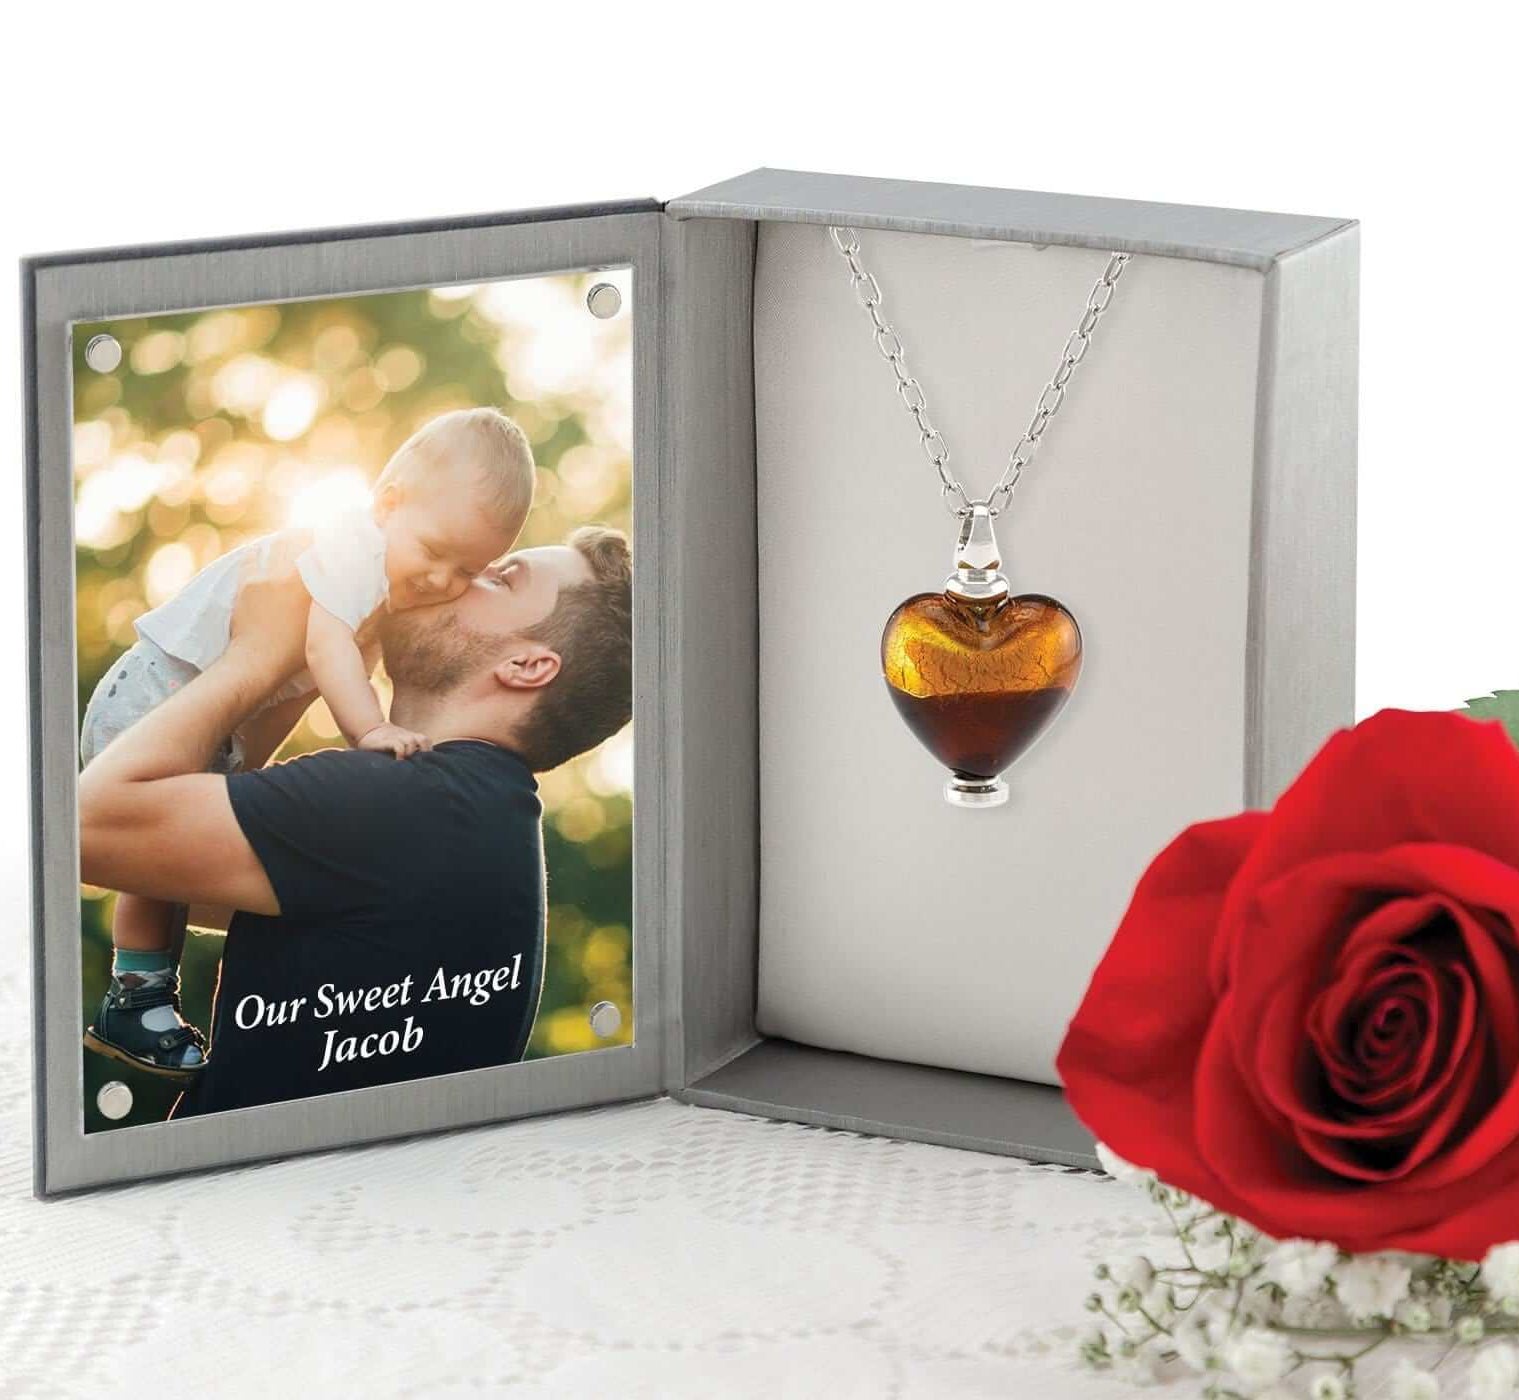 Cara Keepsakes Murano Glass Heart Urn - 'Sweet Promise' in jewelry box